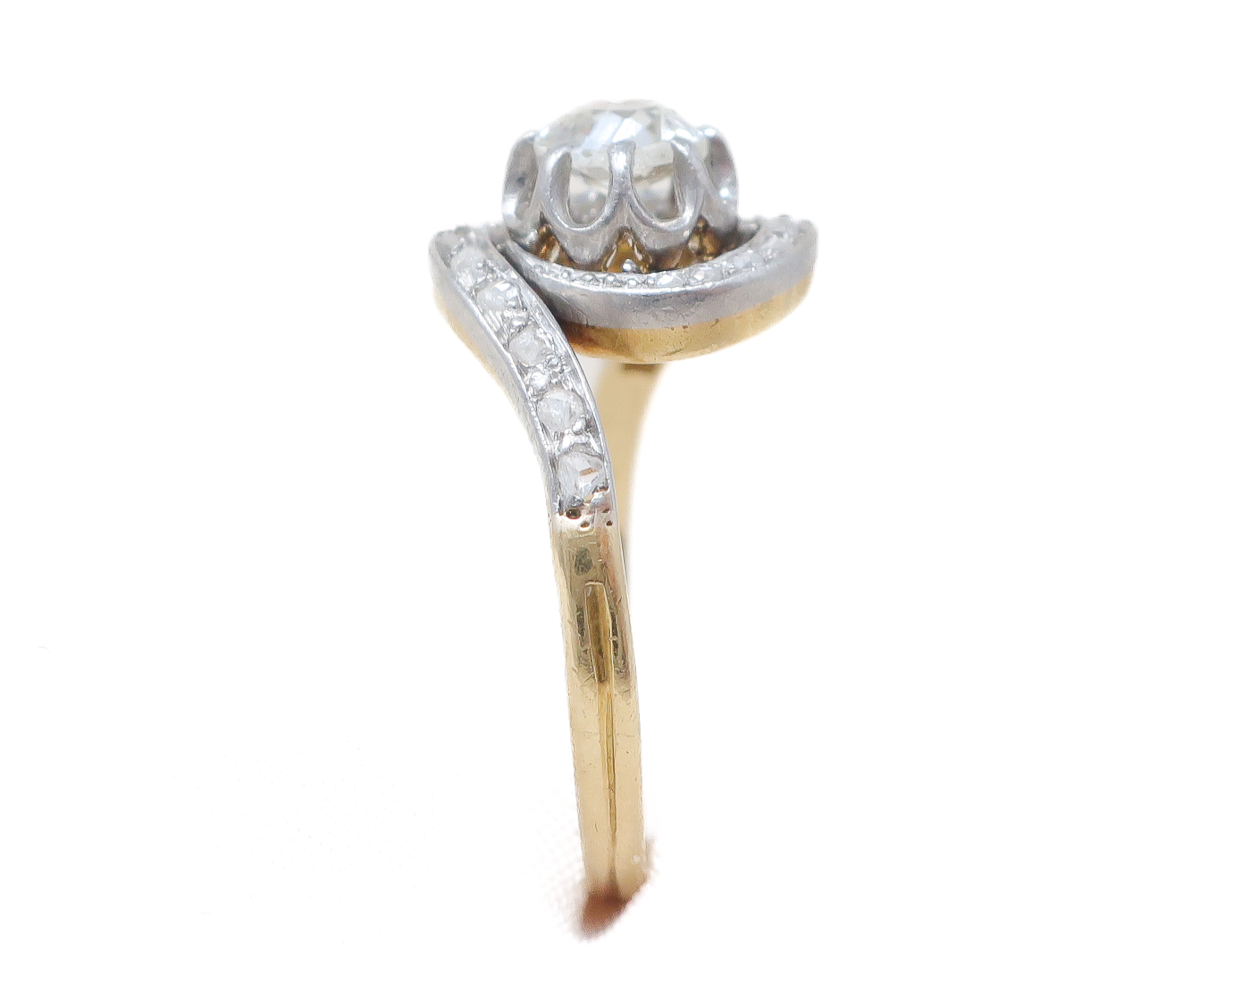 Edwardian French Imperial Diamond Ring